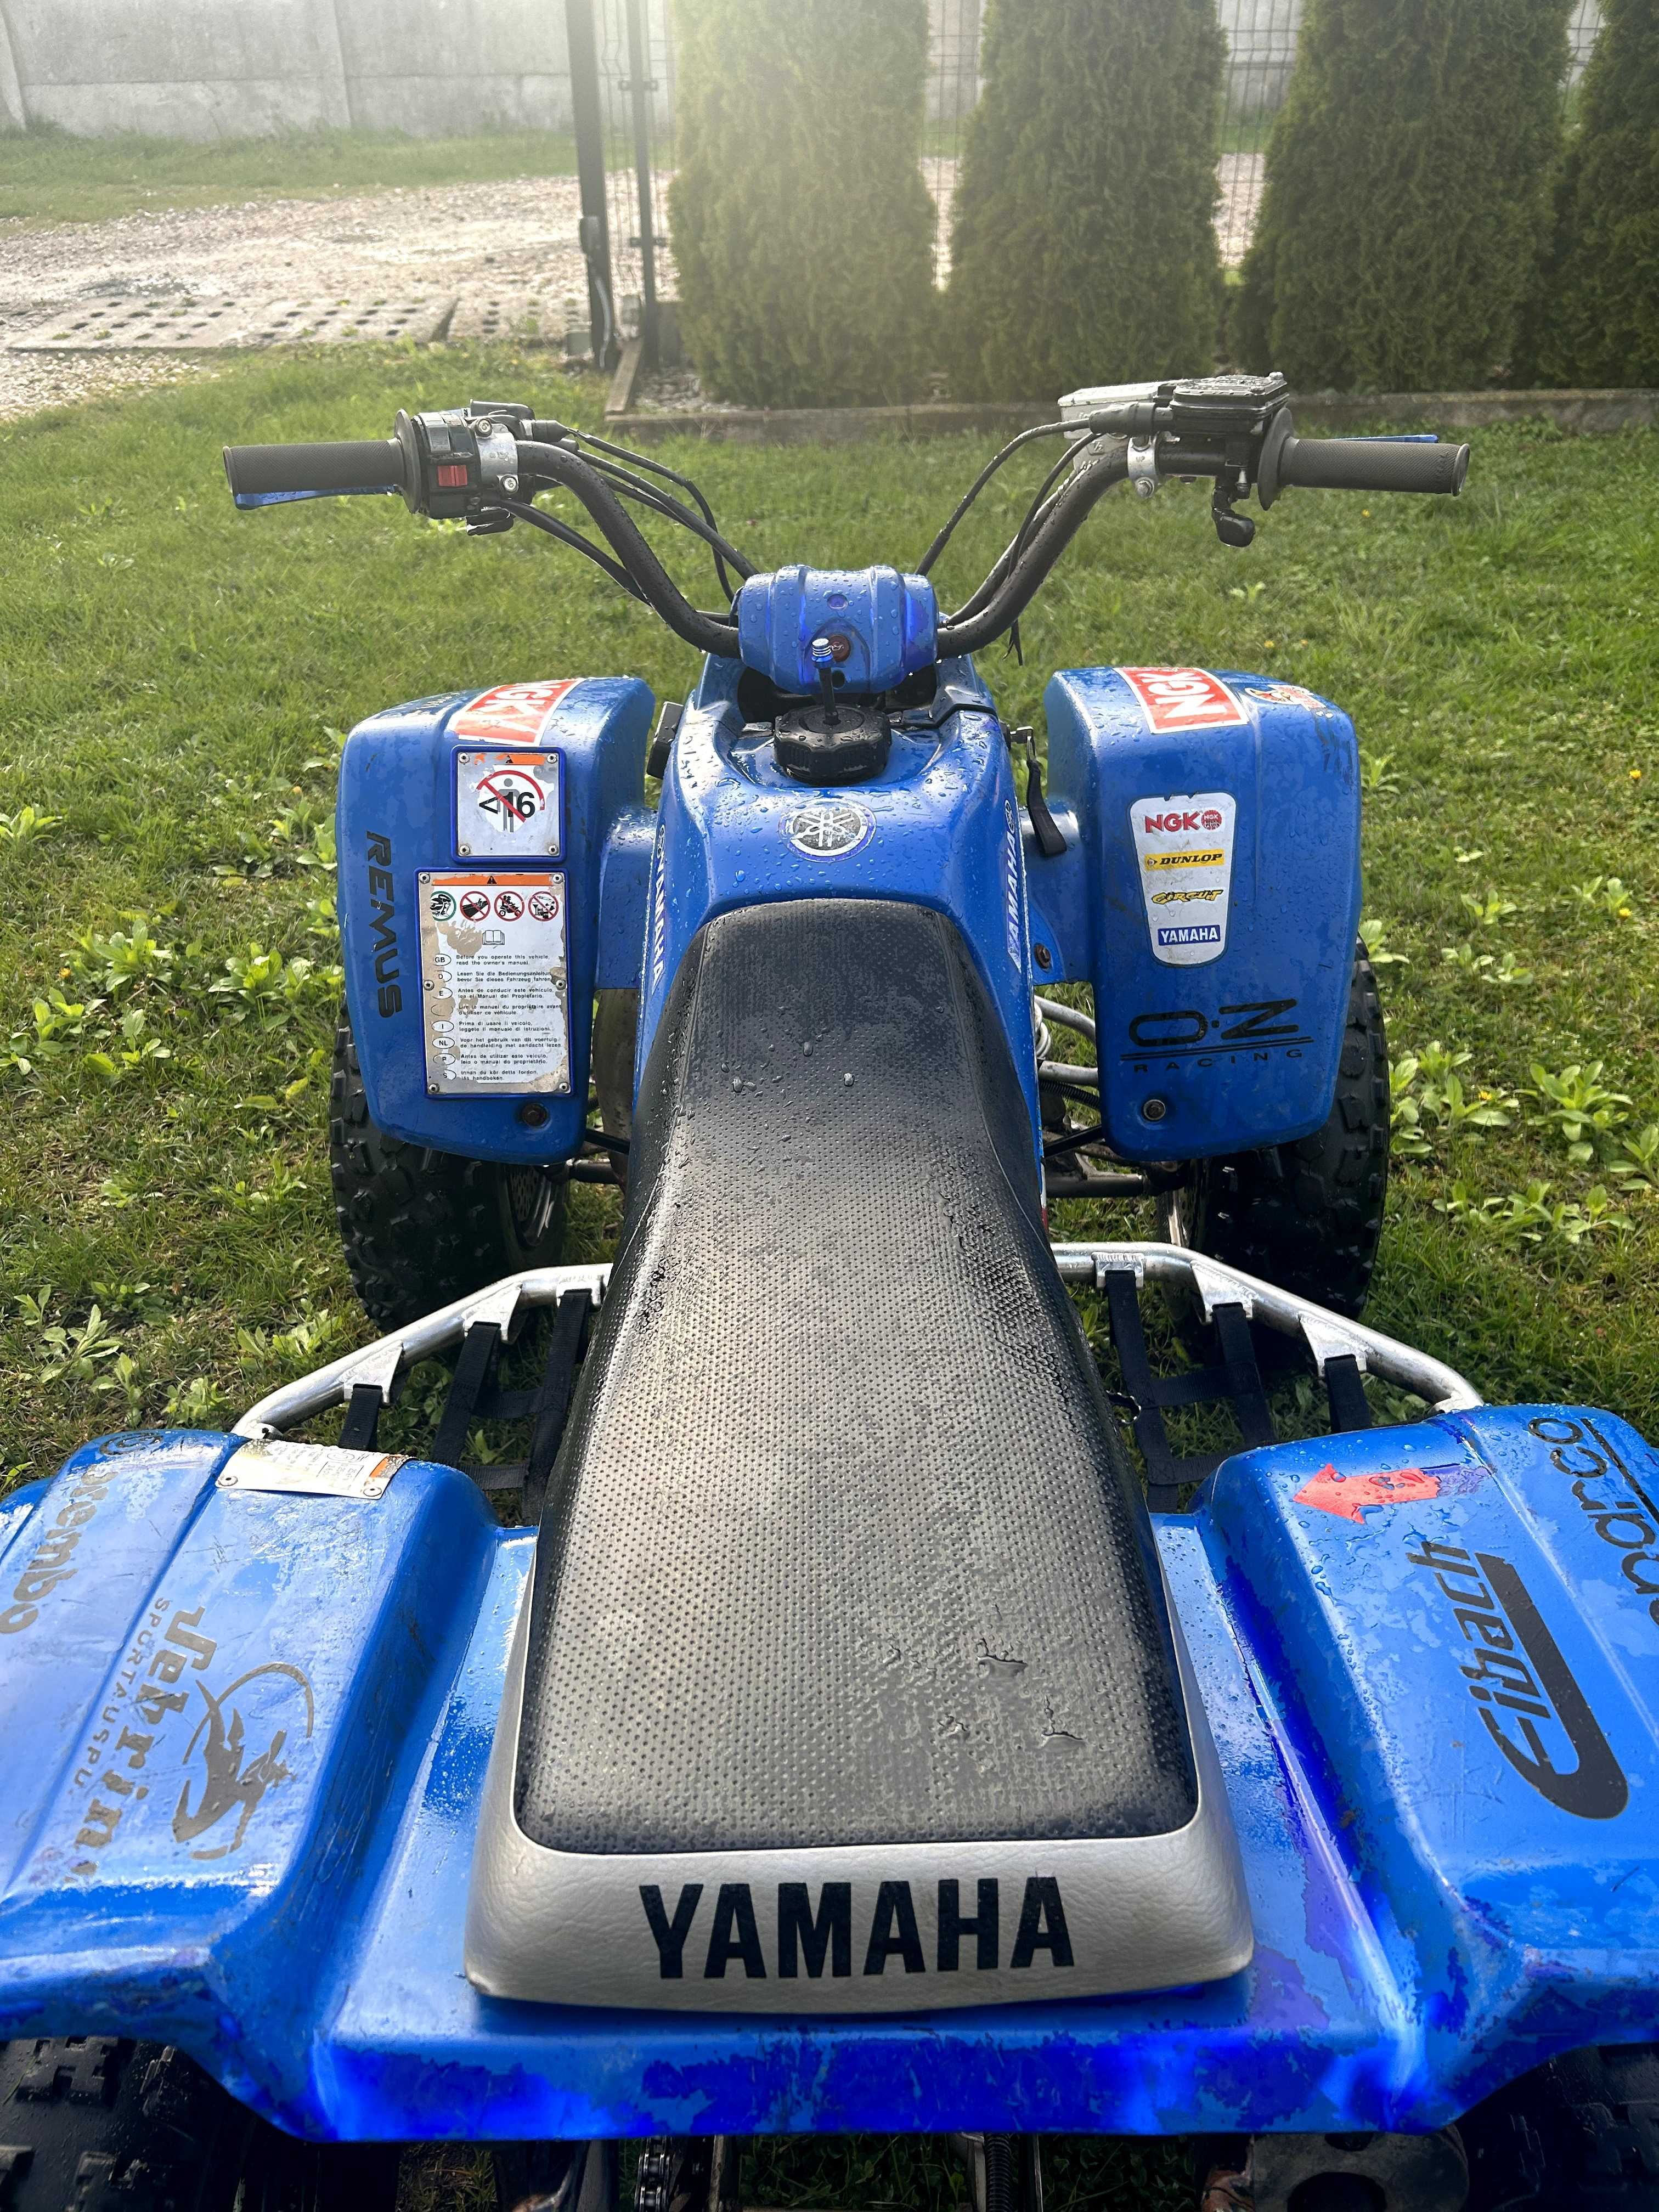 Yamaha blaster 200